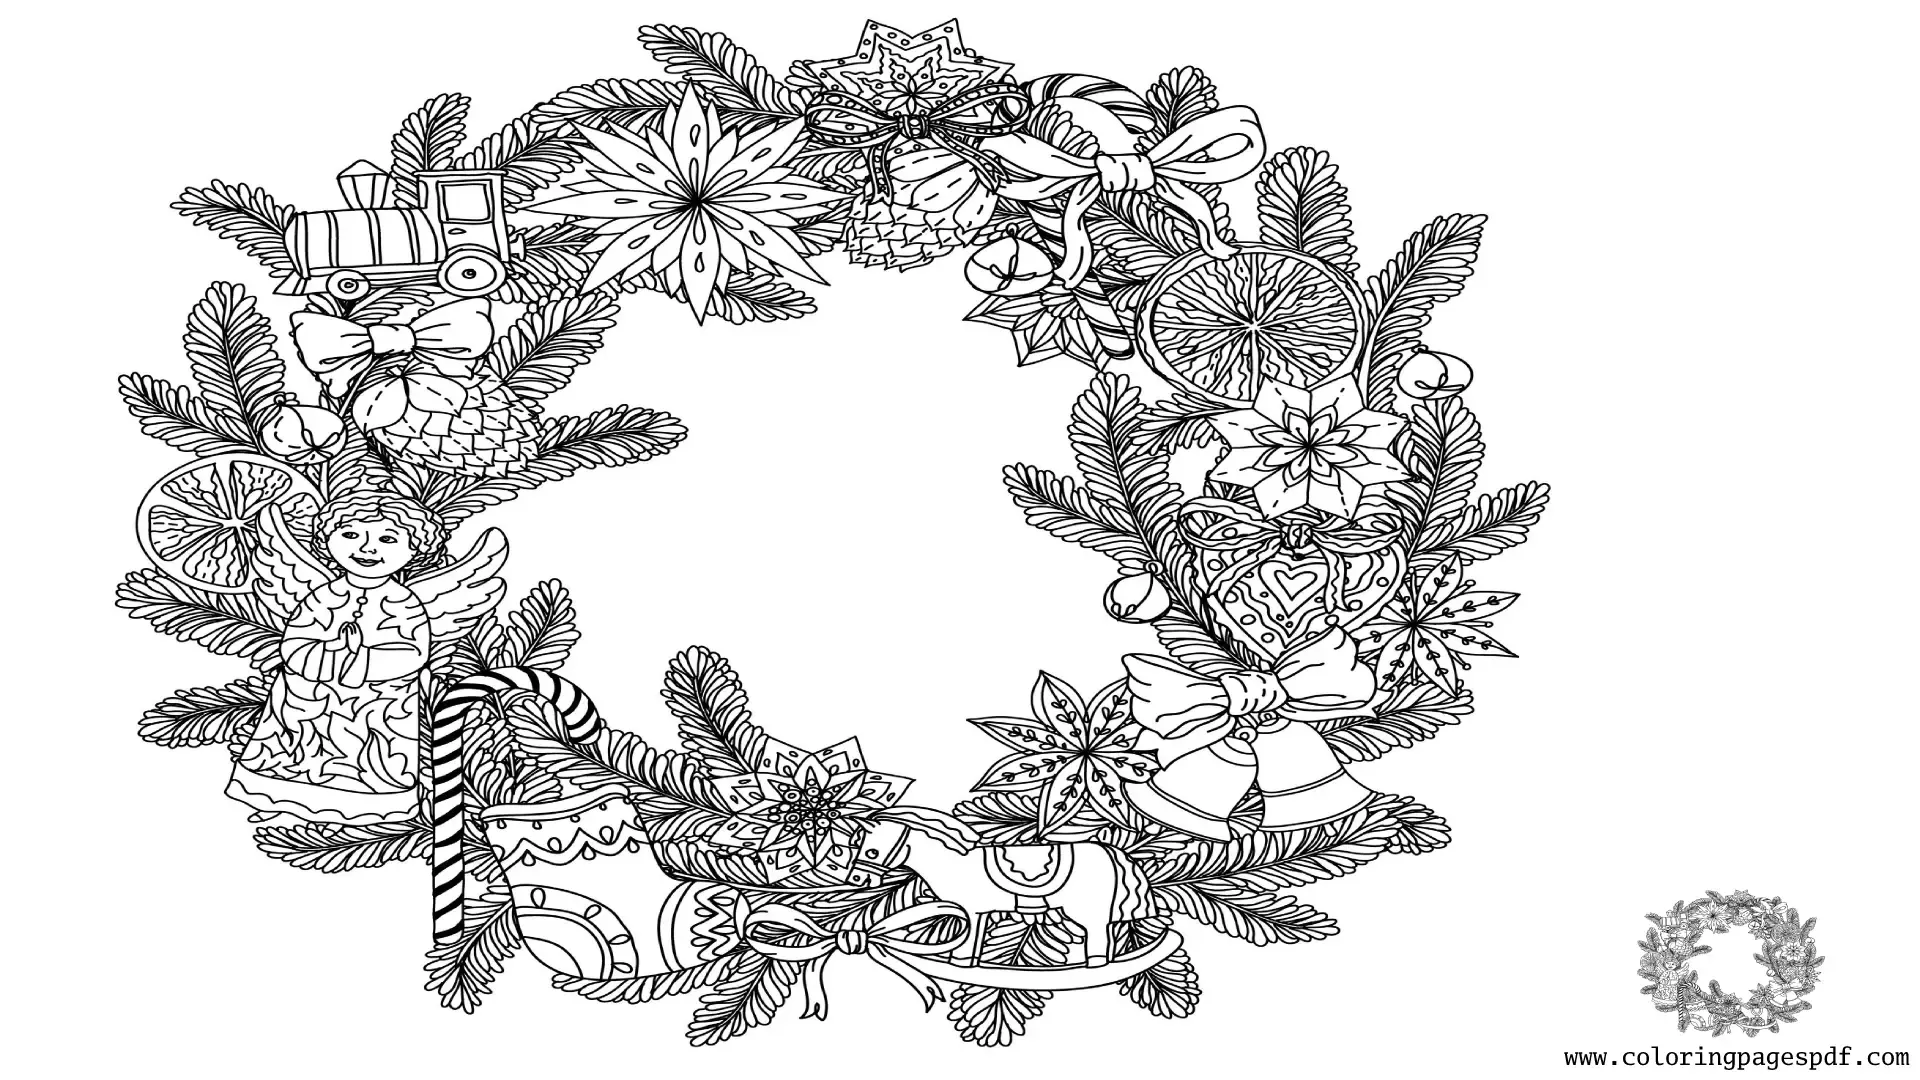 Coloring Page Of A Christmas Wreath Mandala